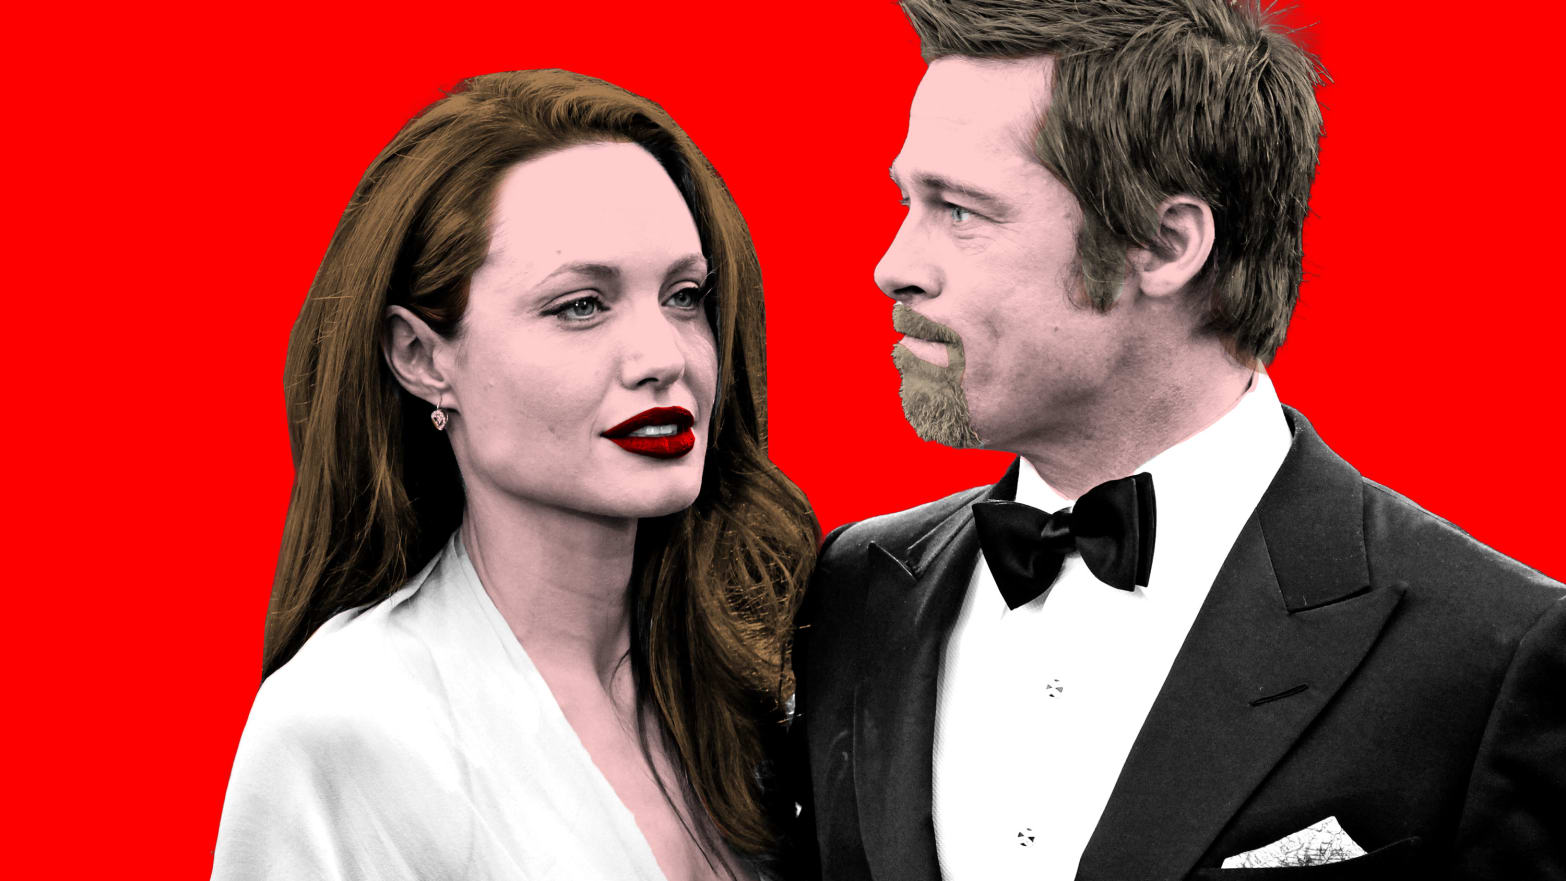 A photo illustration of Brad Pitt and Angelina Jolie